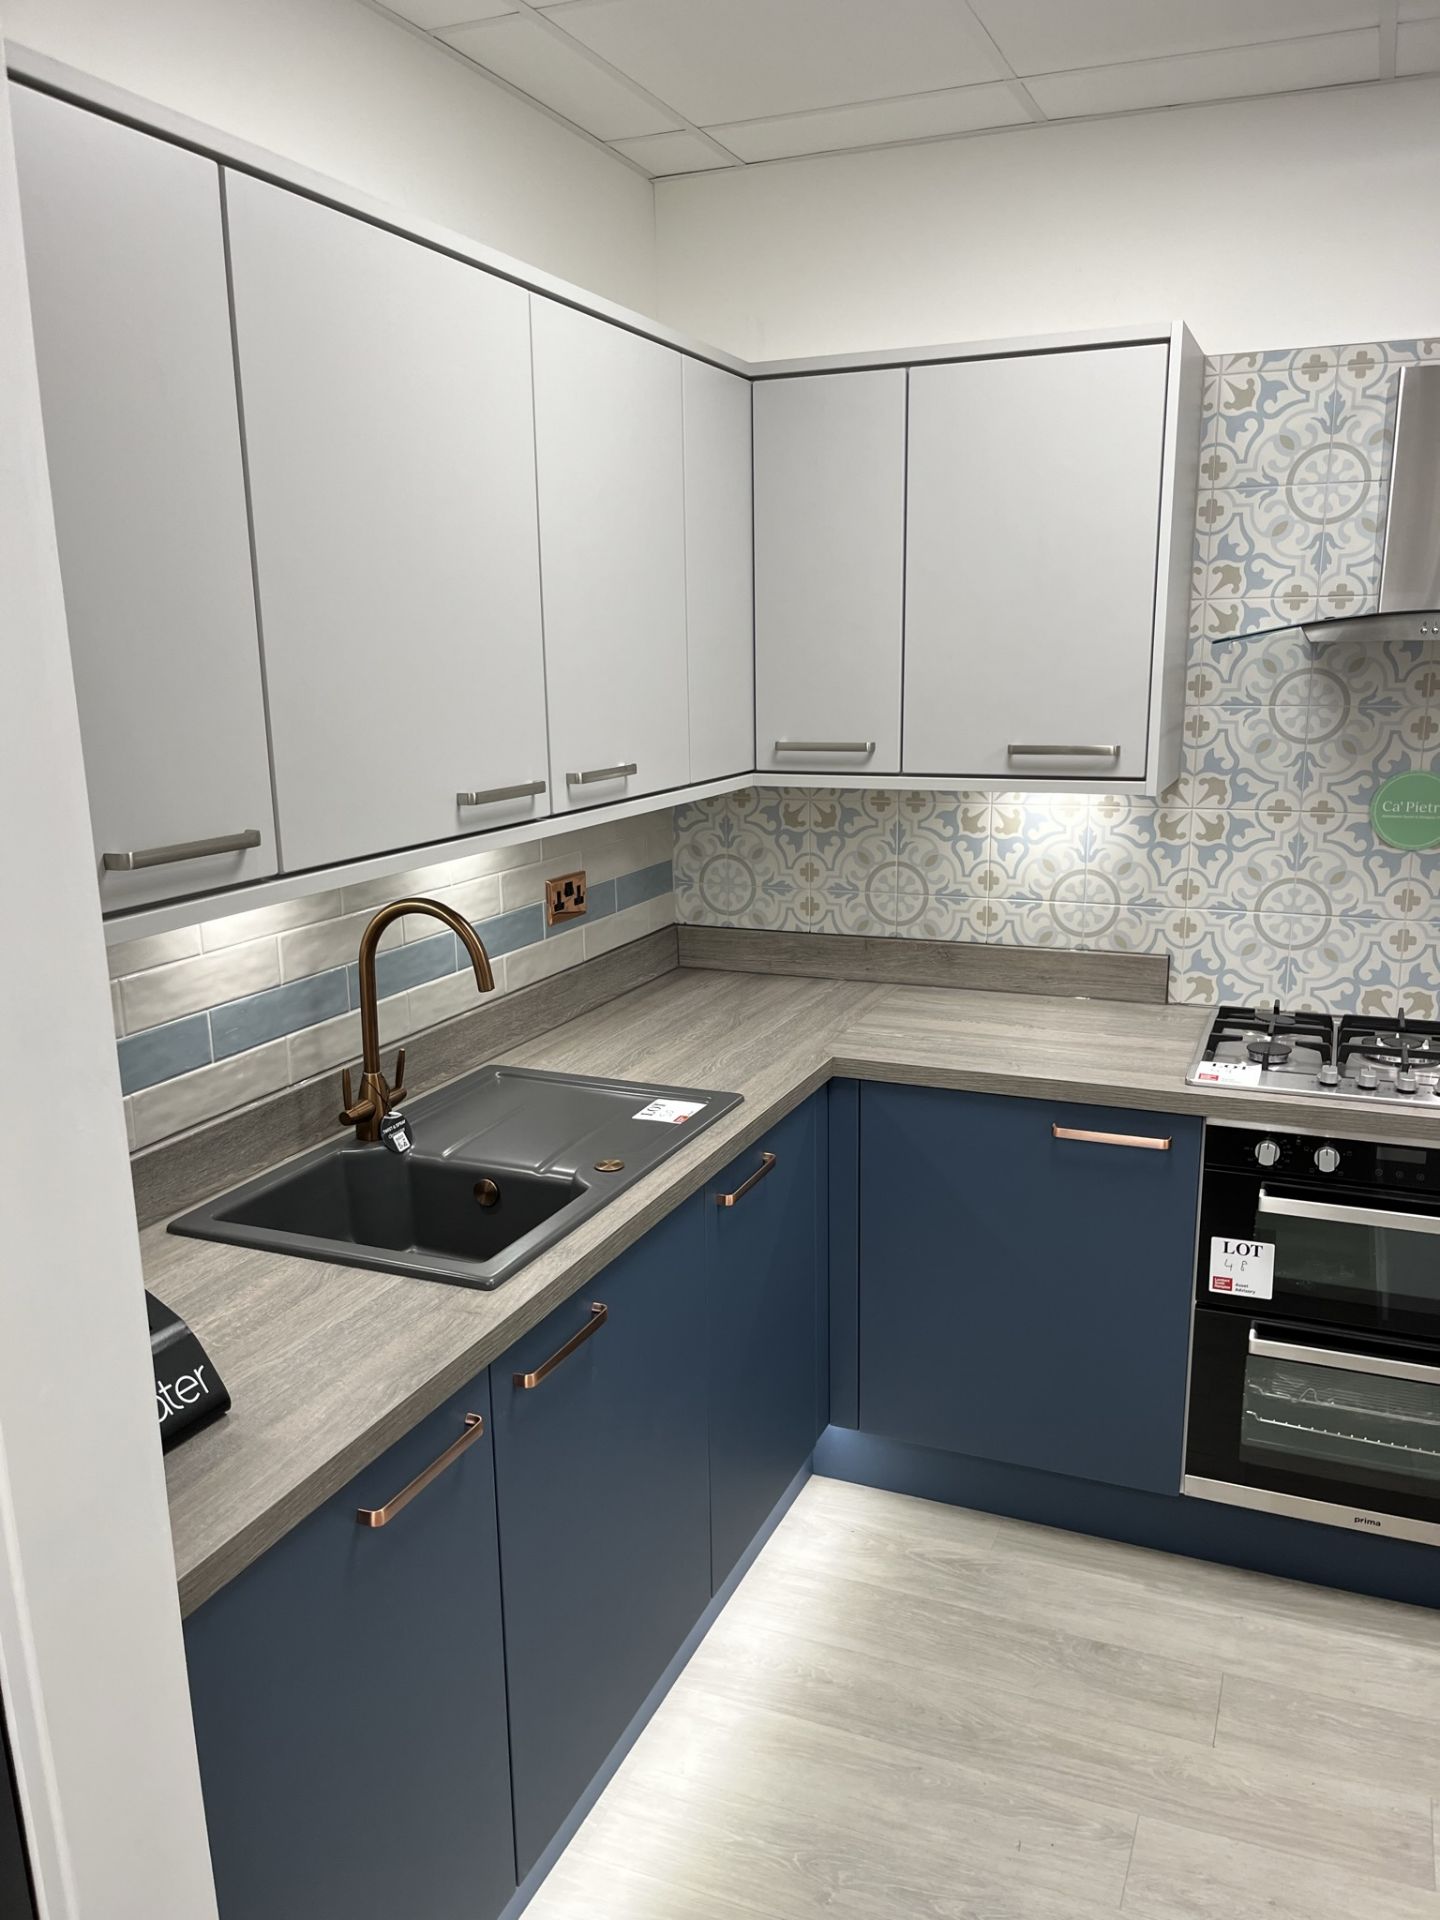 L shape laminate kitchen carcus with 11 cupboards, 4 drawers, laminate worktop, single basin sink - Bild 2 aus 4